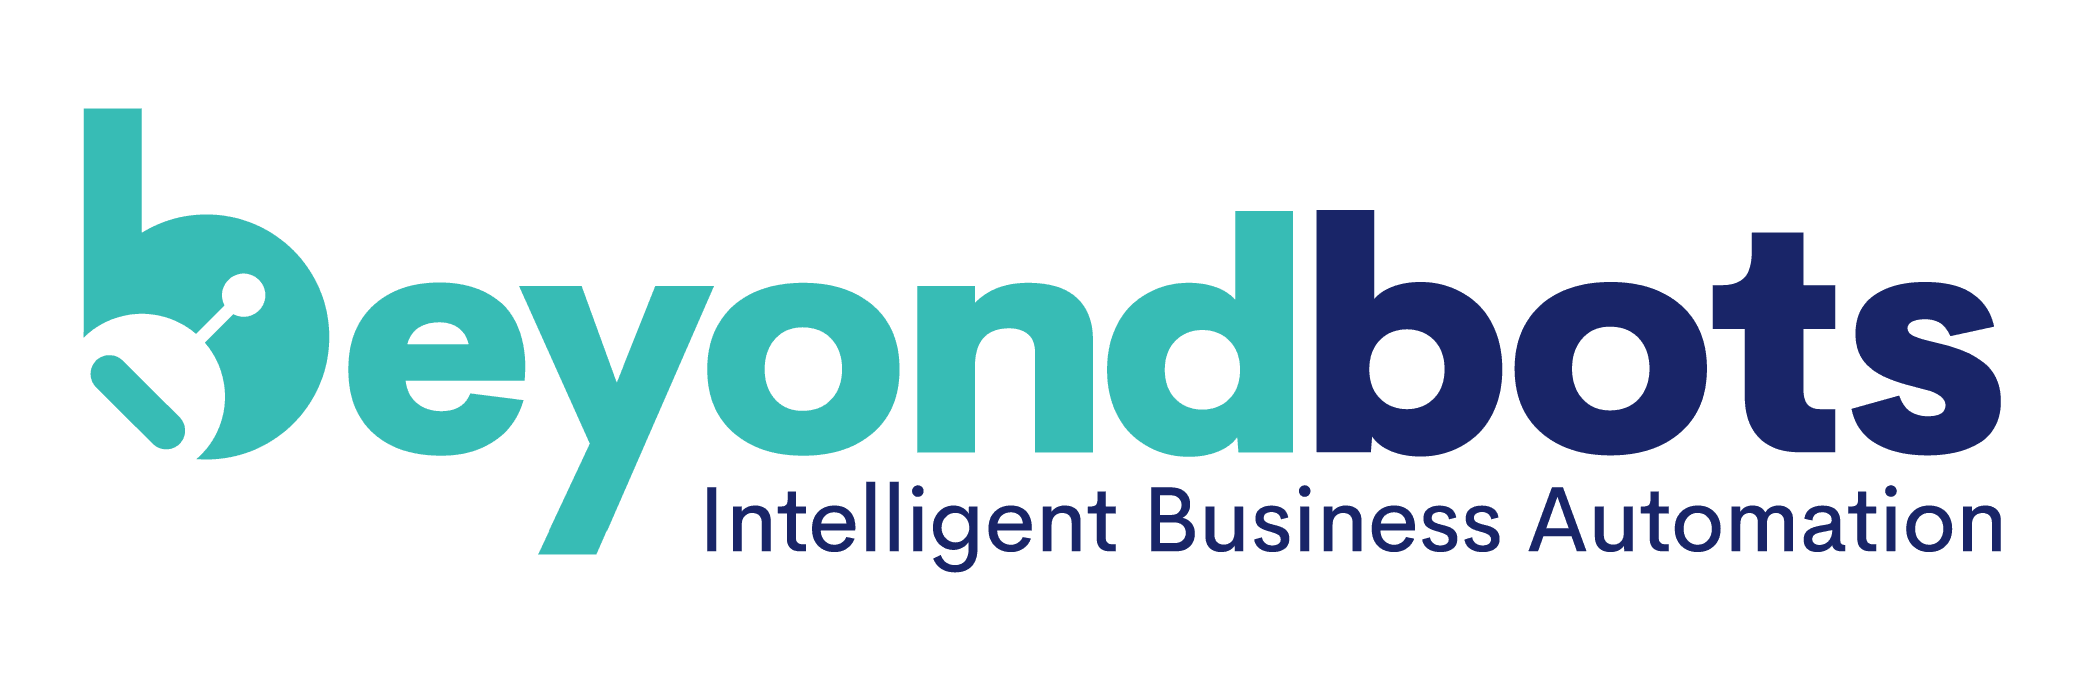 Beyond-Bots Logo farbig